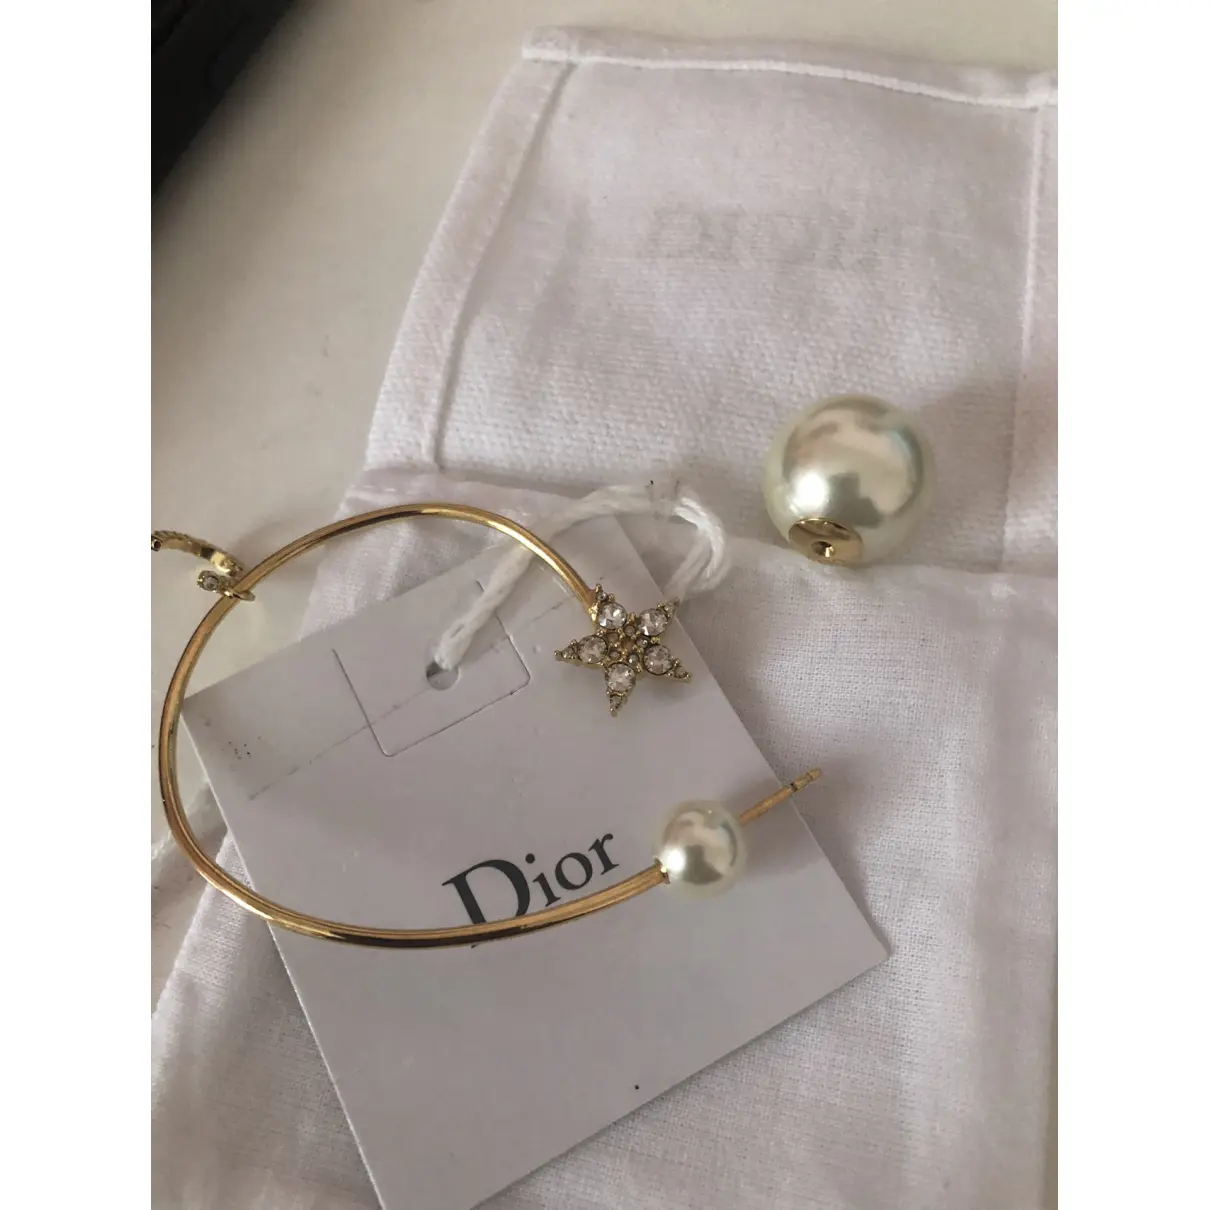 Tribal earrings Dior